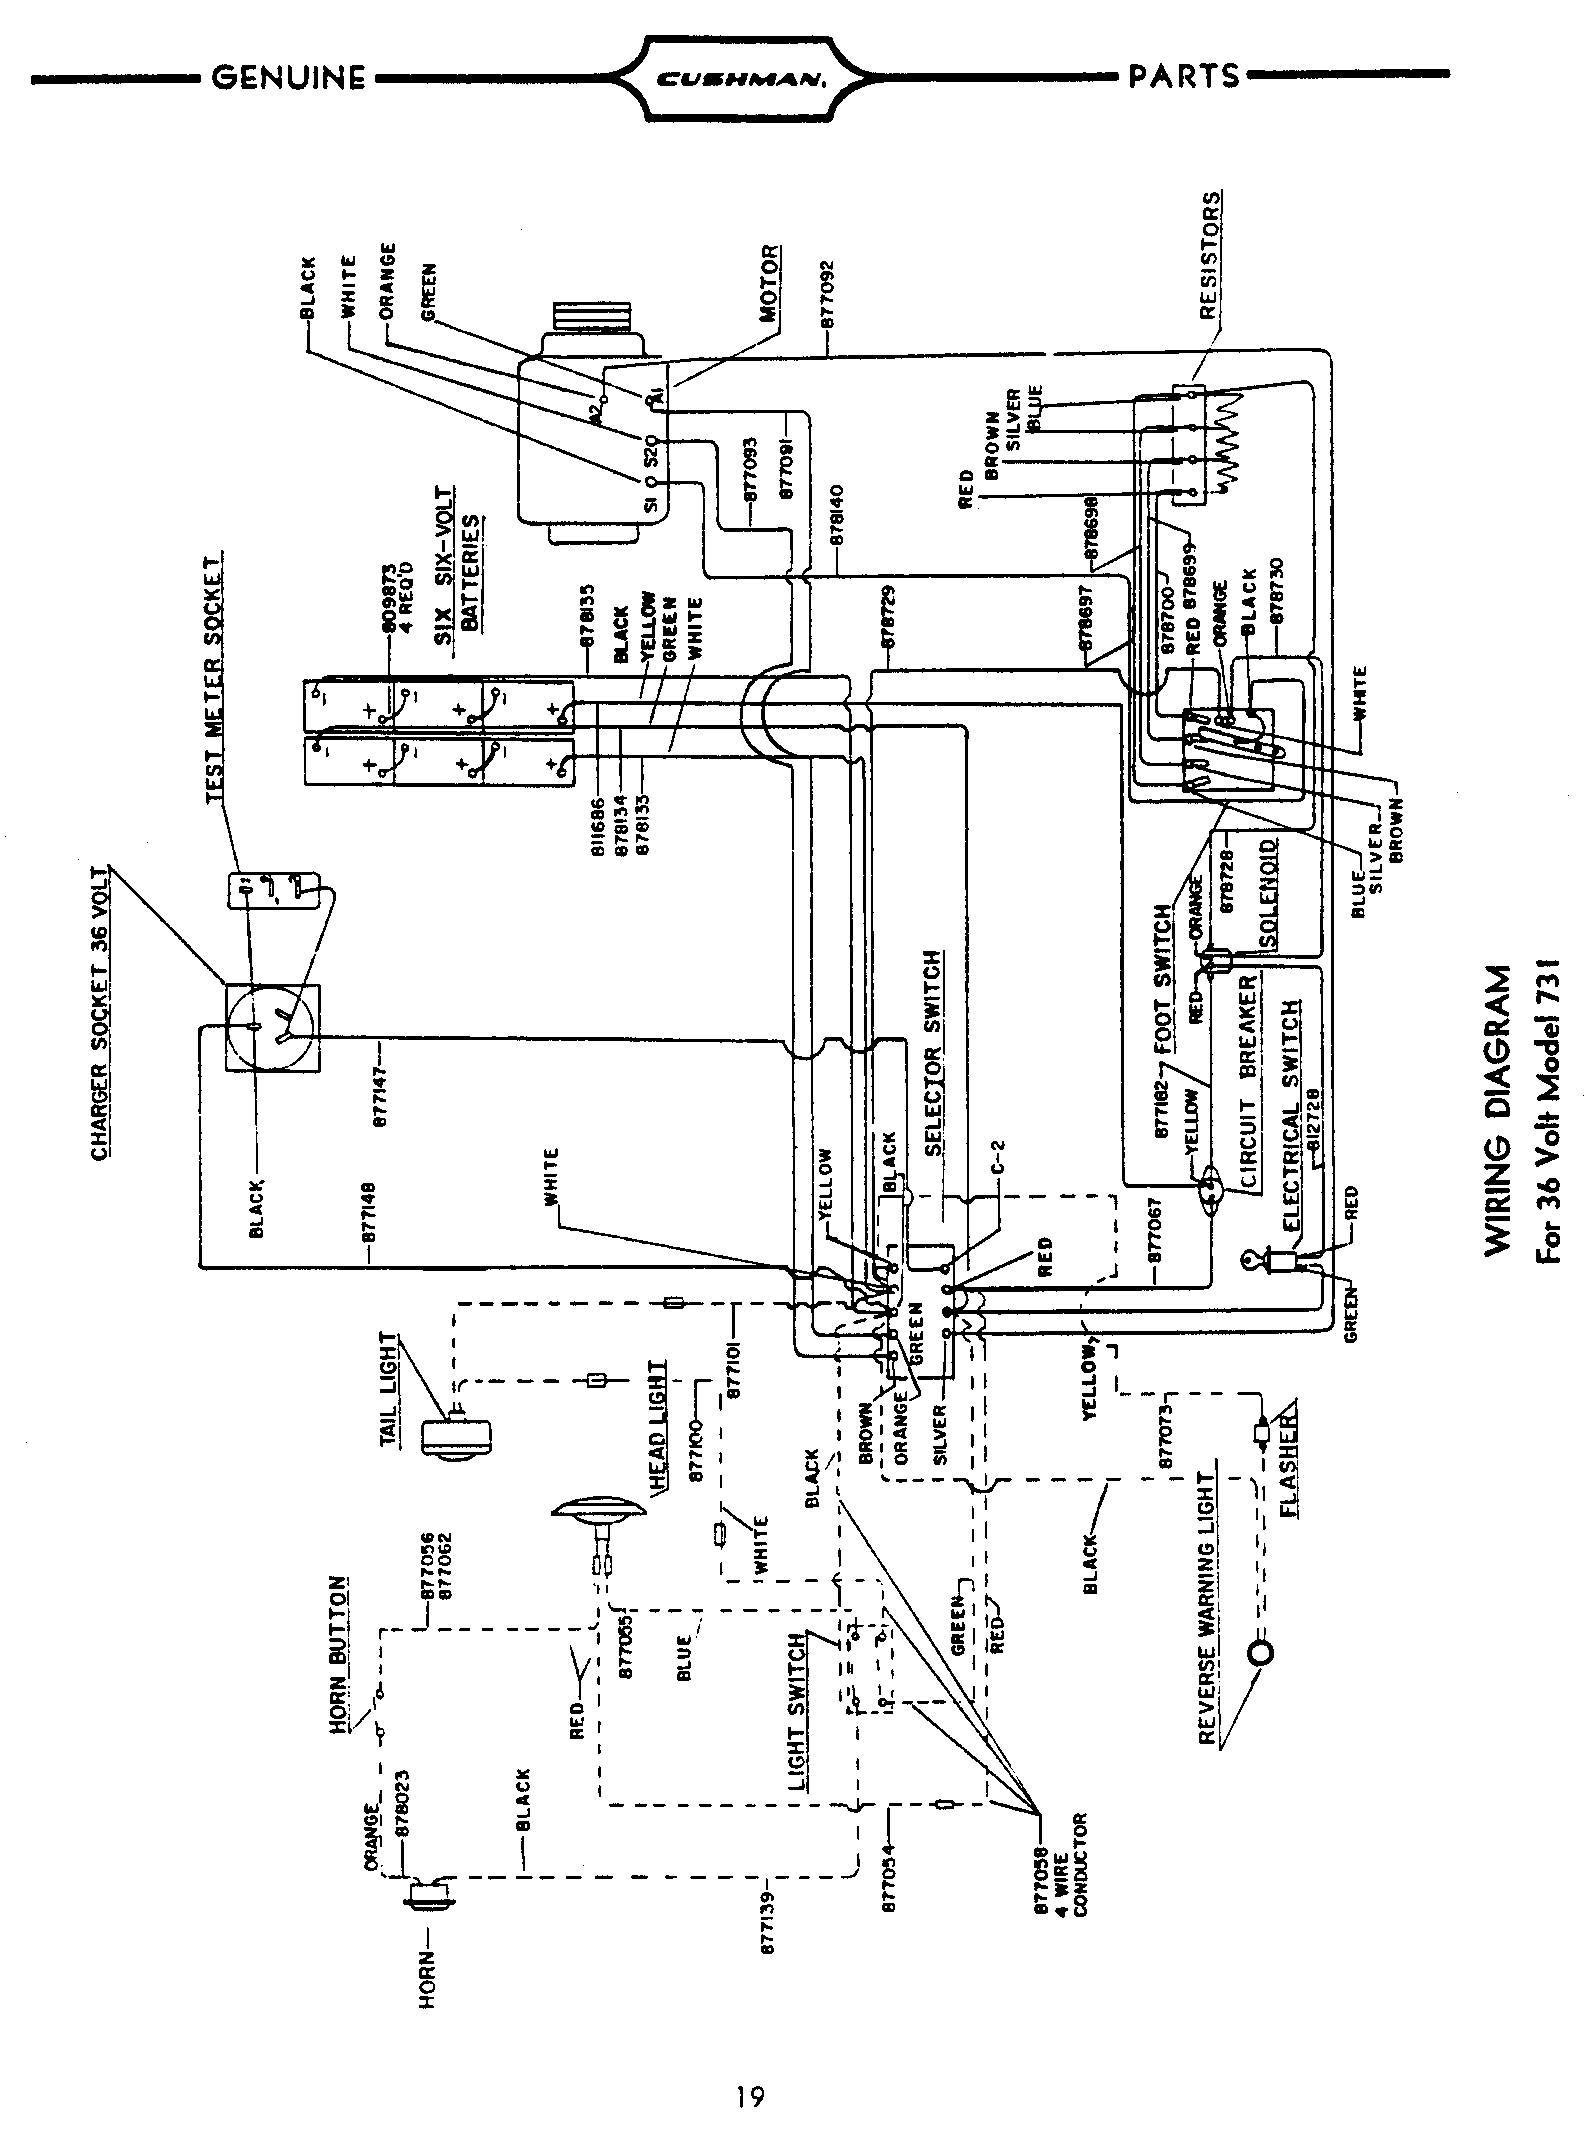 Wiring Diagram for A 1988 Club Car Ds 6087] 36 Volt Club Car Wiring Diagram Schematic Of Wiring Diagram for A 1988 Club Car